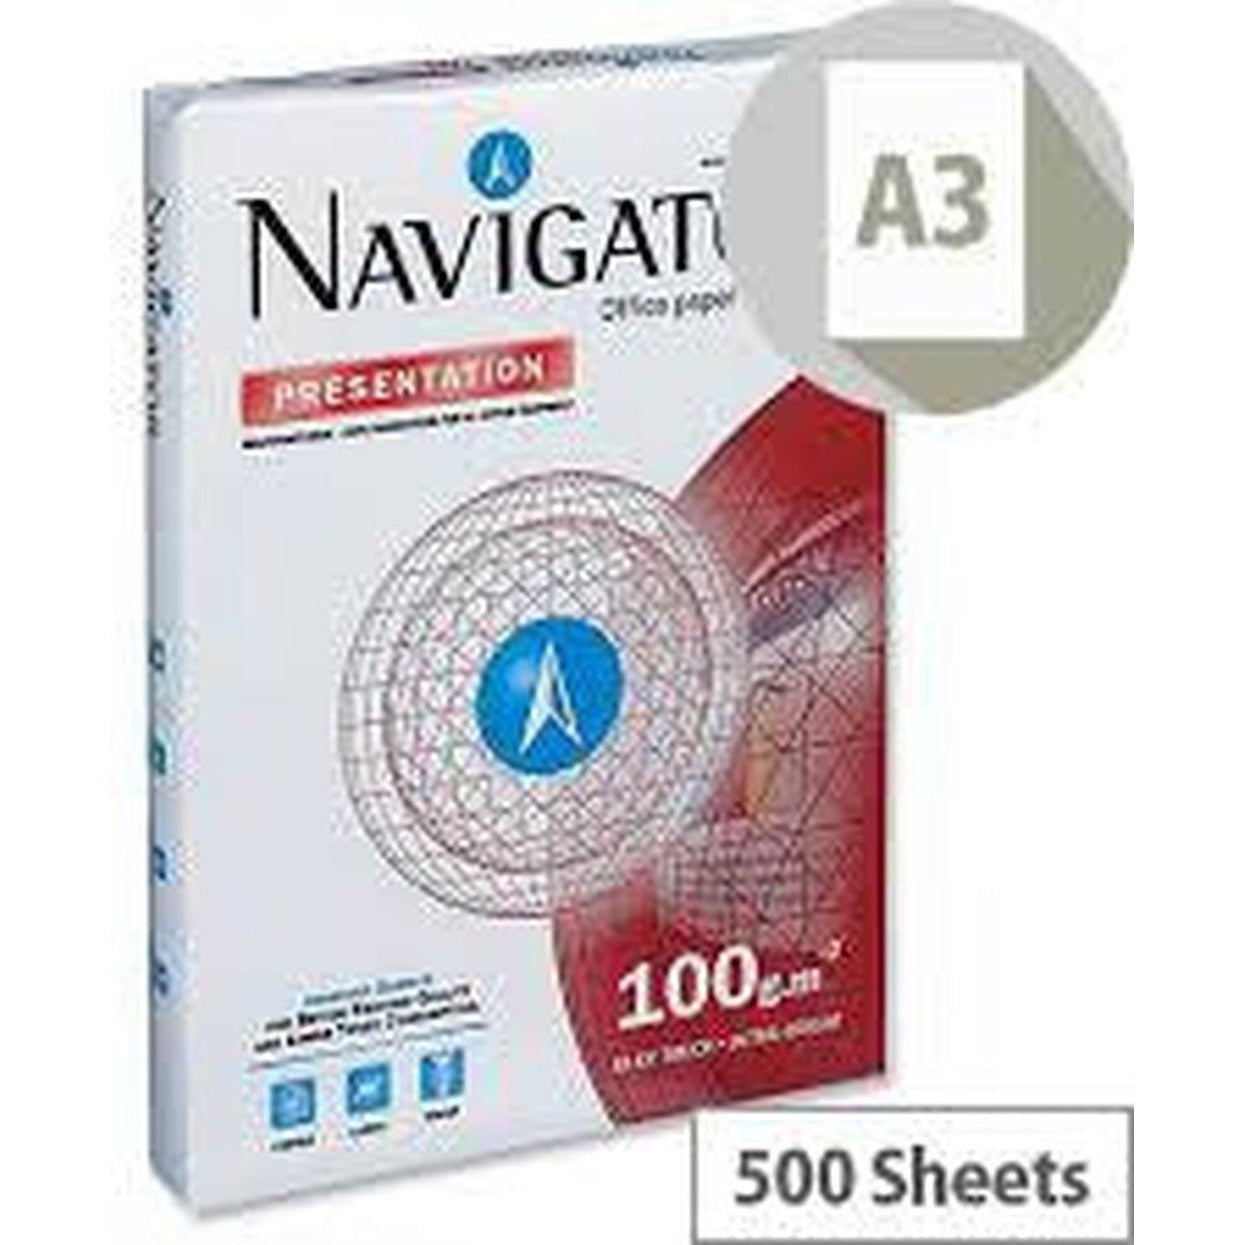 Navigator A3 Presentation Paper 100Gsm Pack Of 500 Sheets-Stationery Paper-Other-Star Light Kuwait